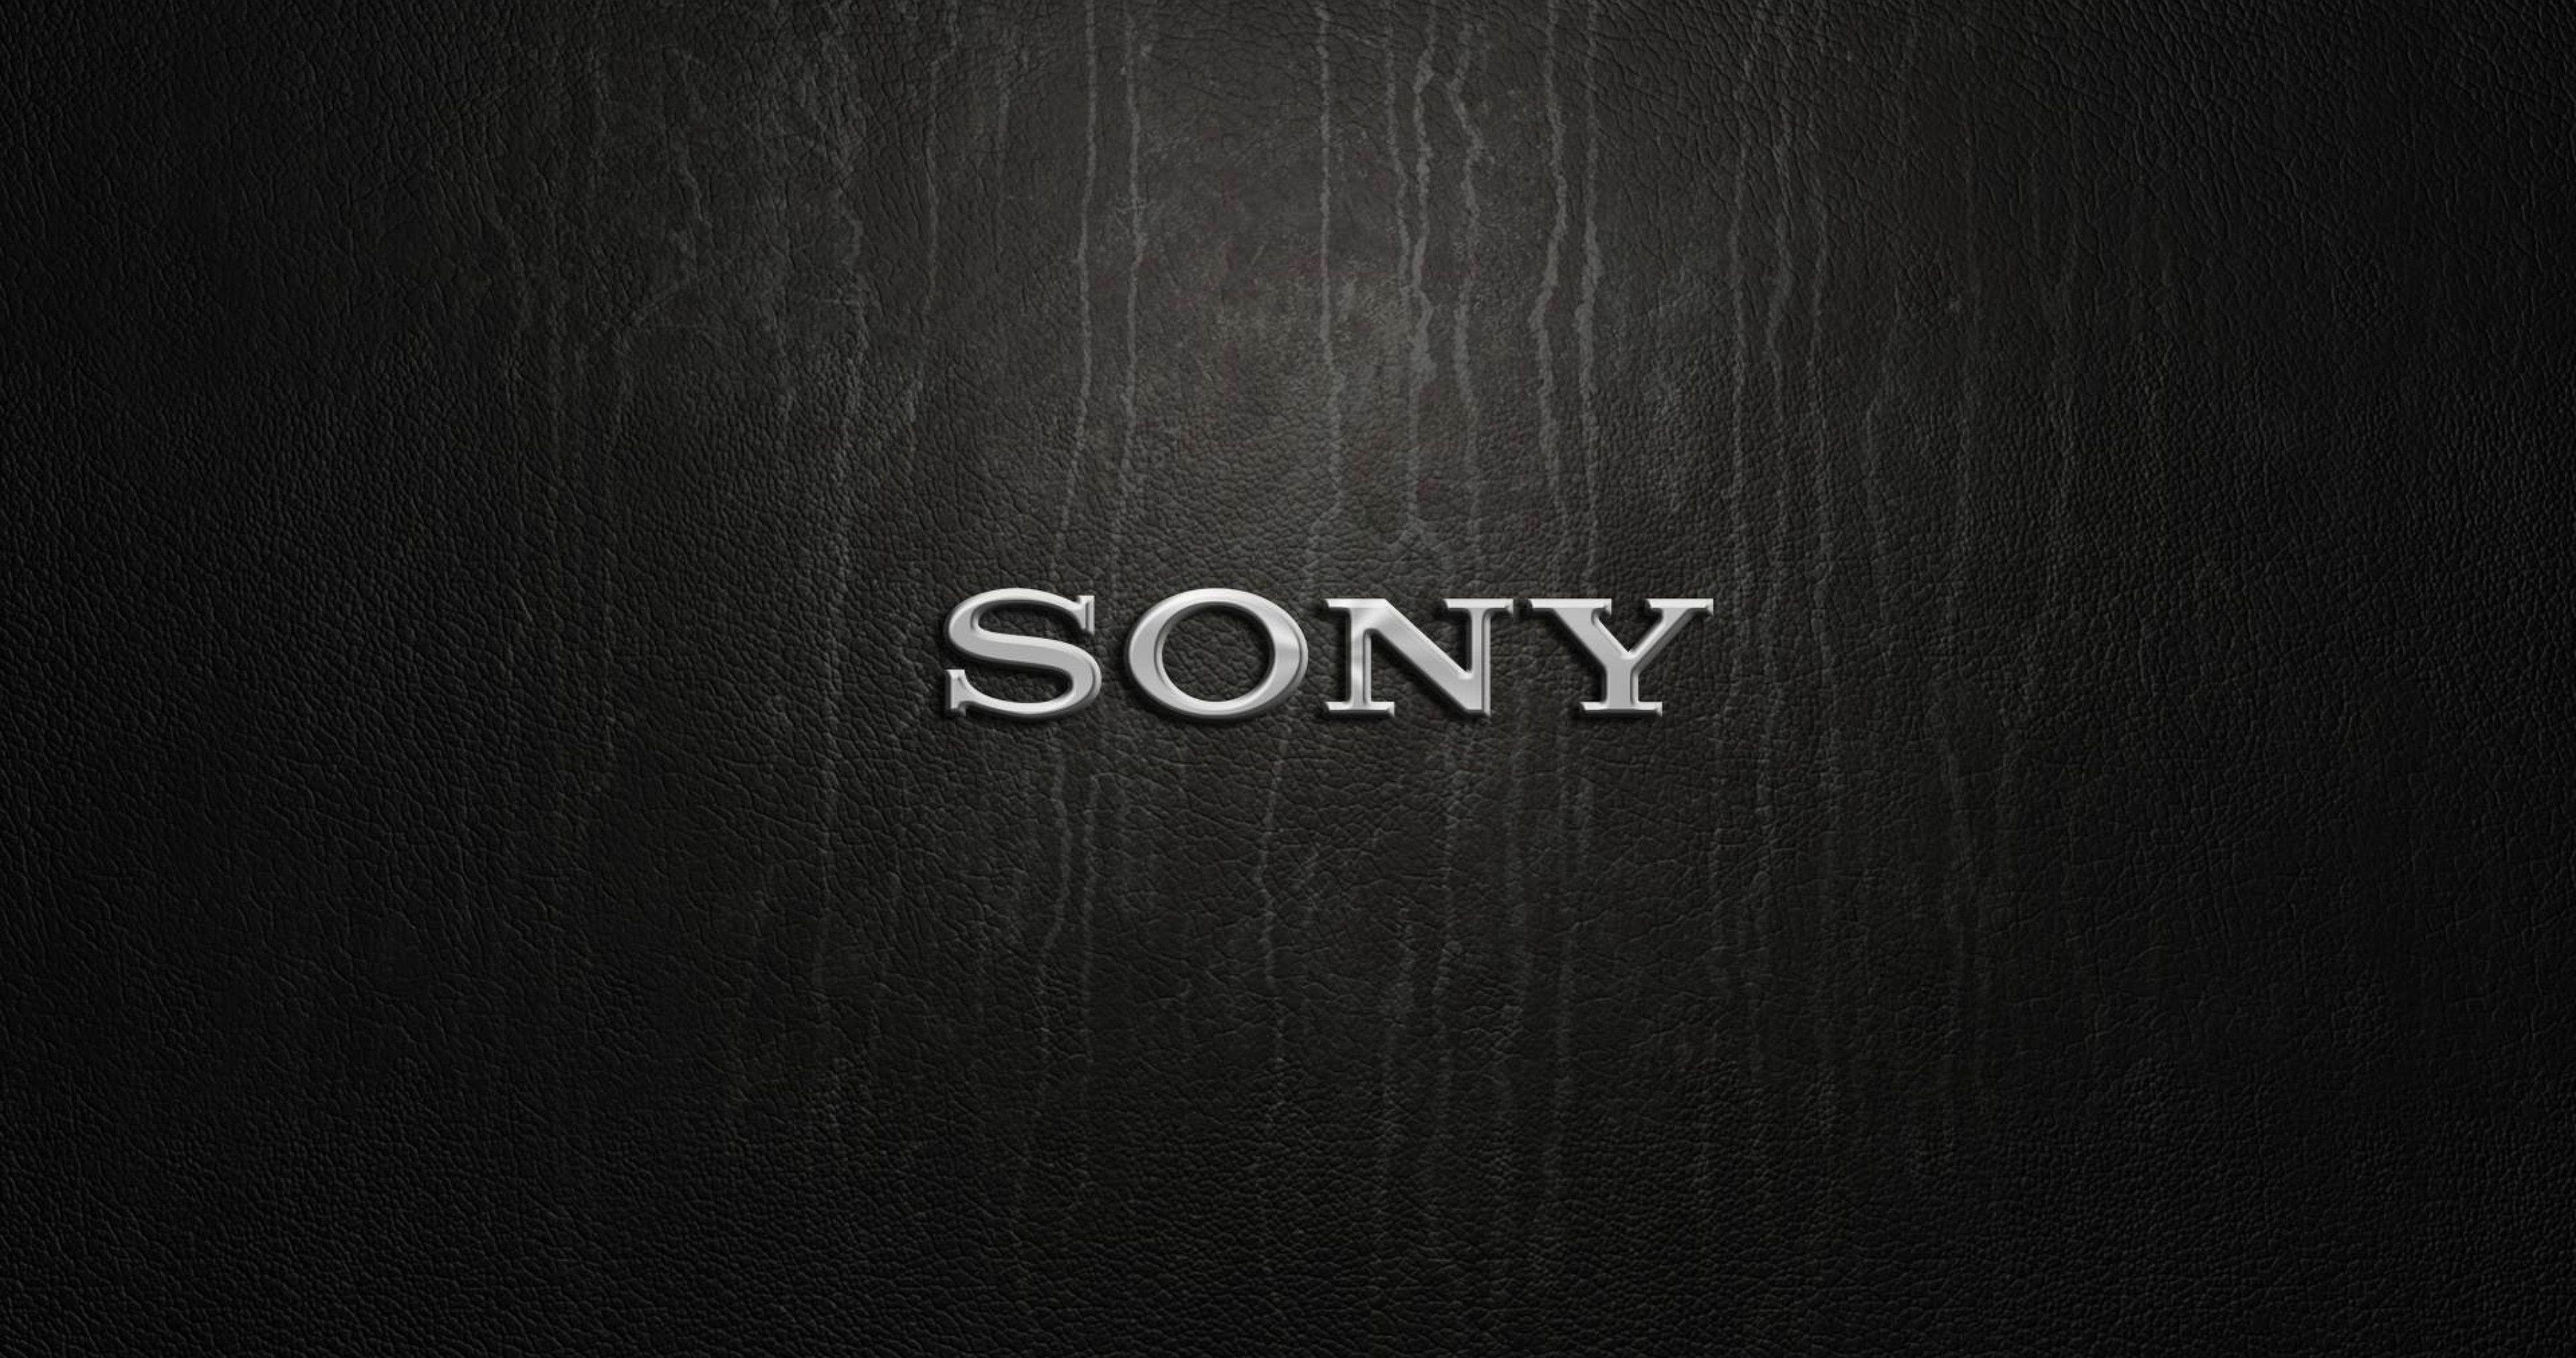 Sony Wallpaper 4k Tv